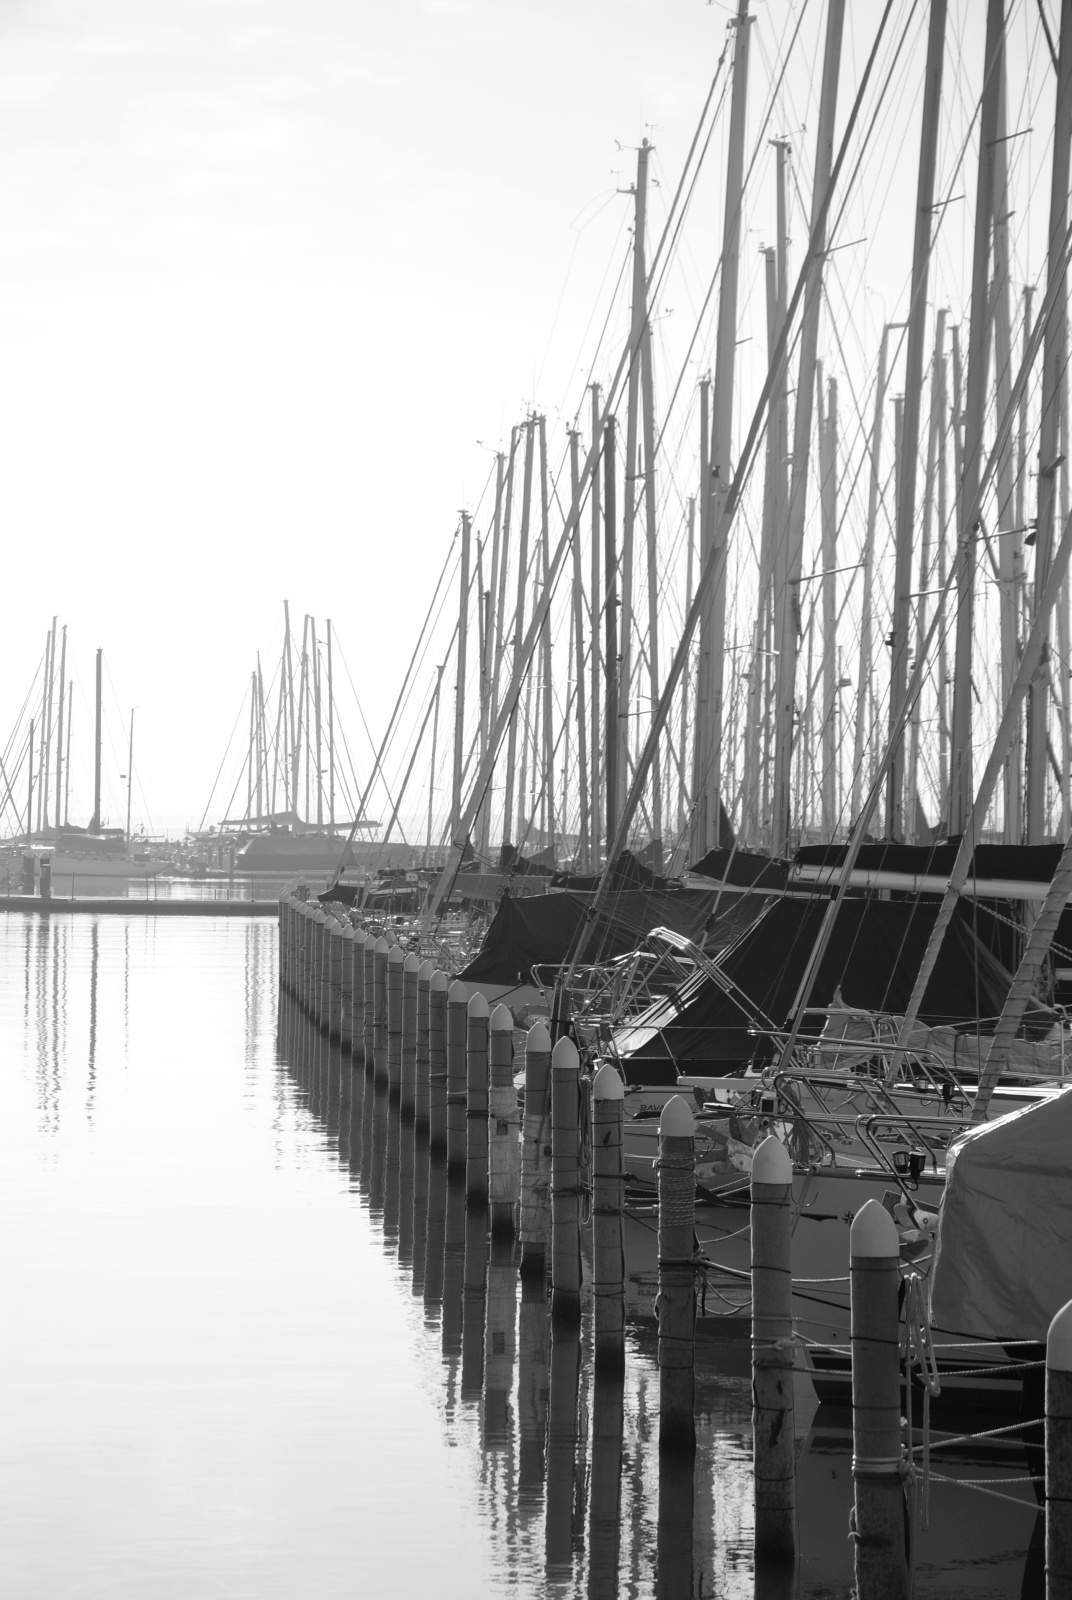 Marina di Ra - boats and seagulls